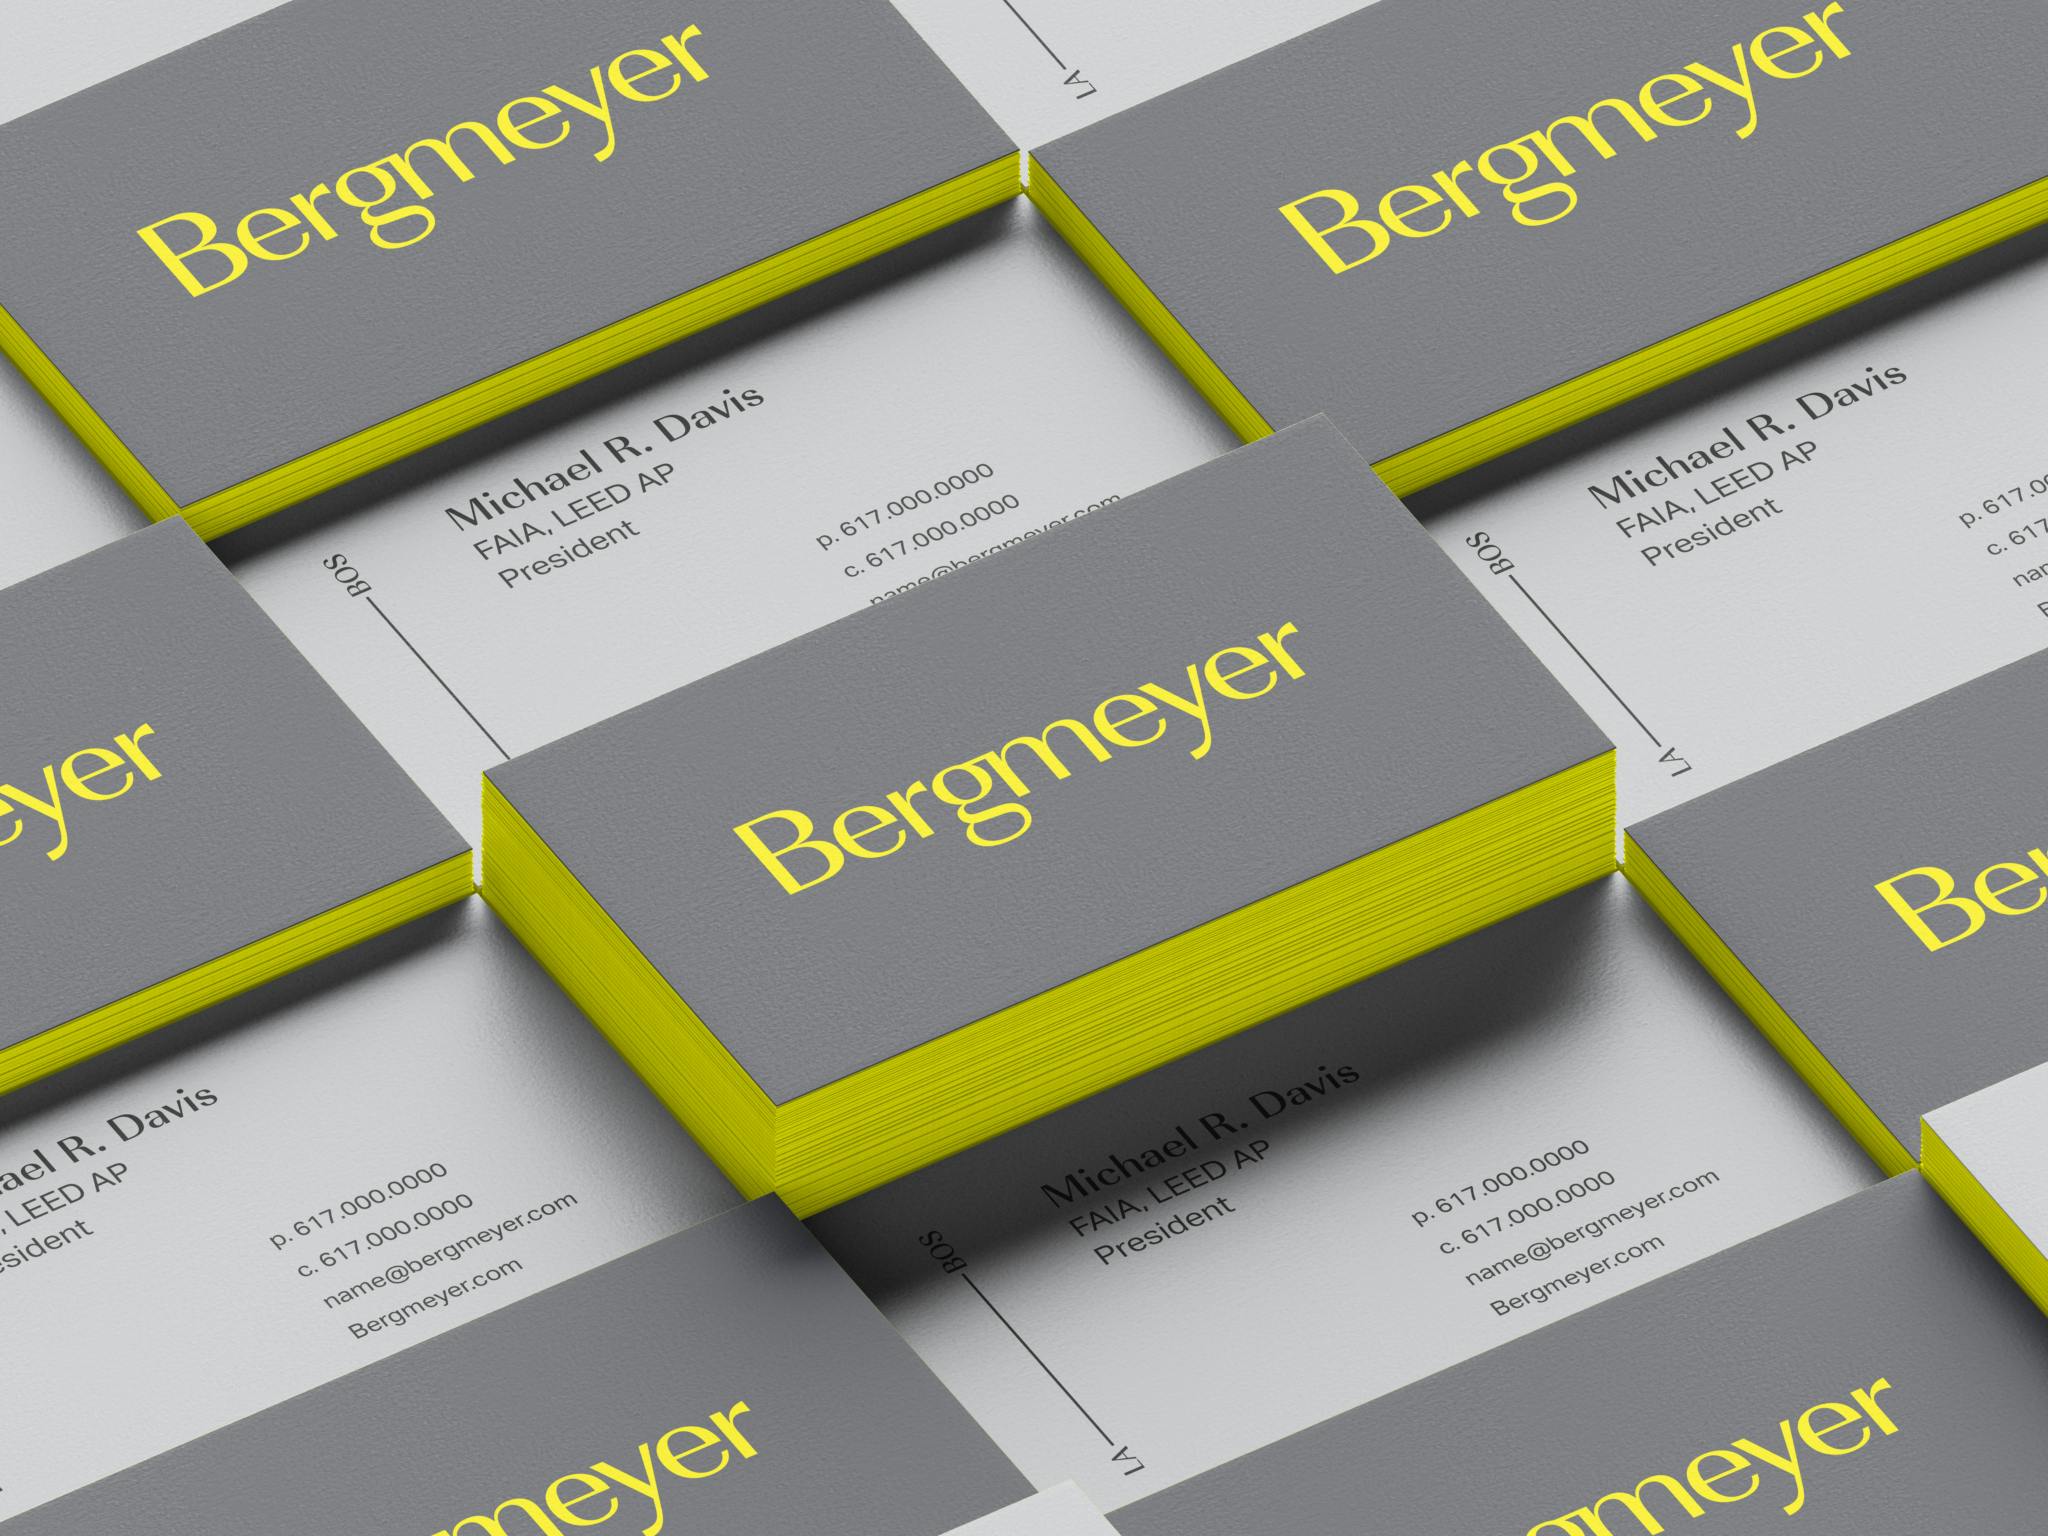 Bergmeyer: Our Rebrand Story